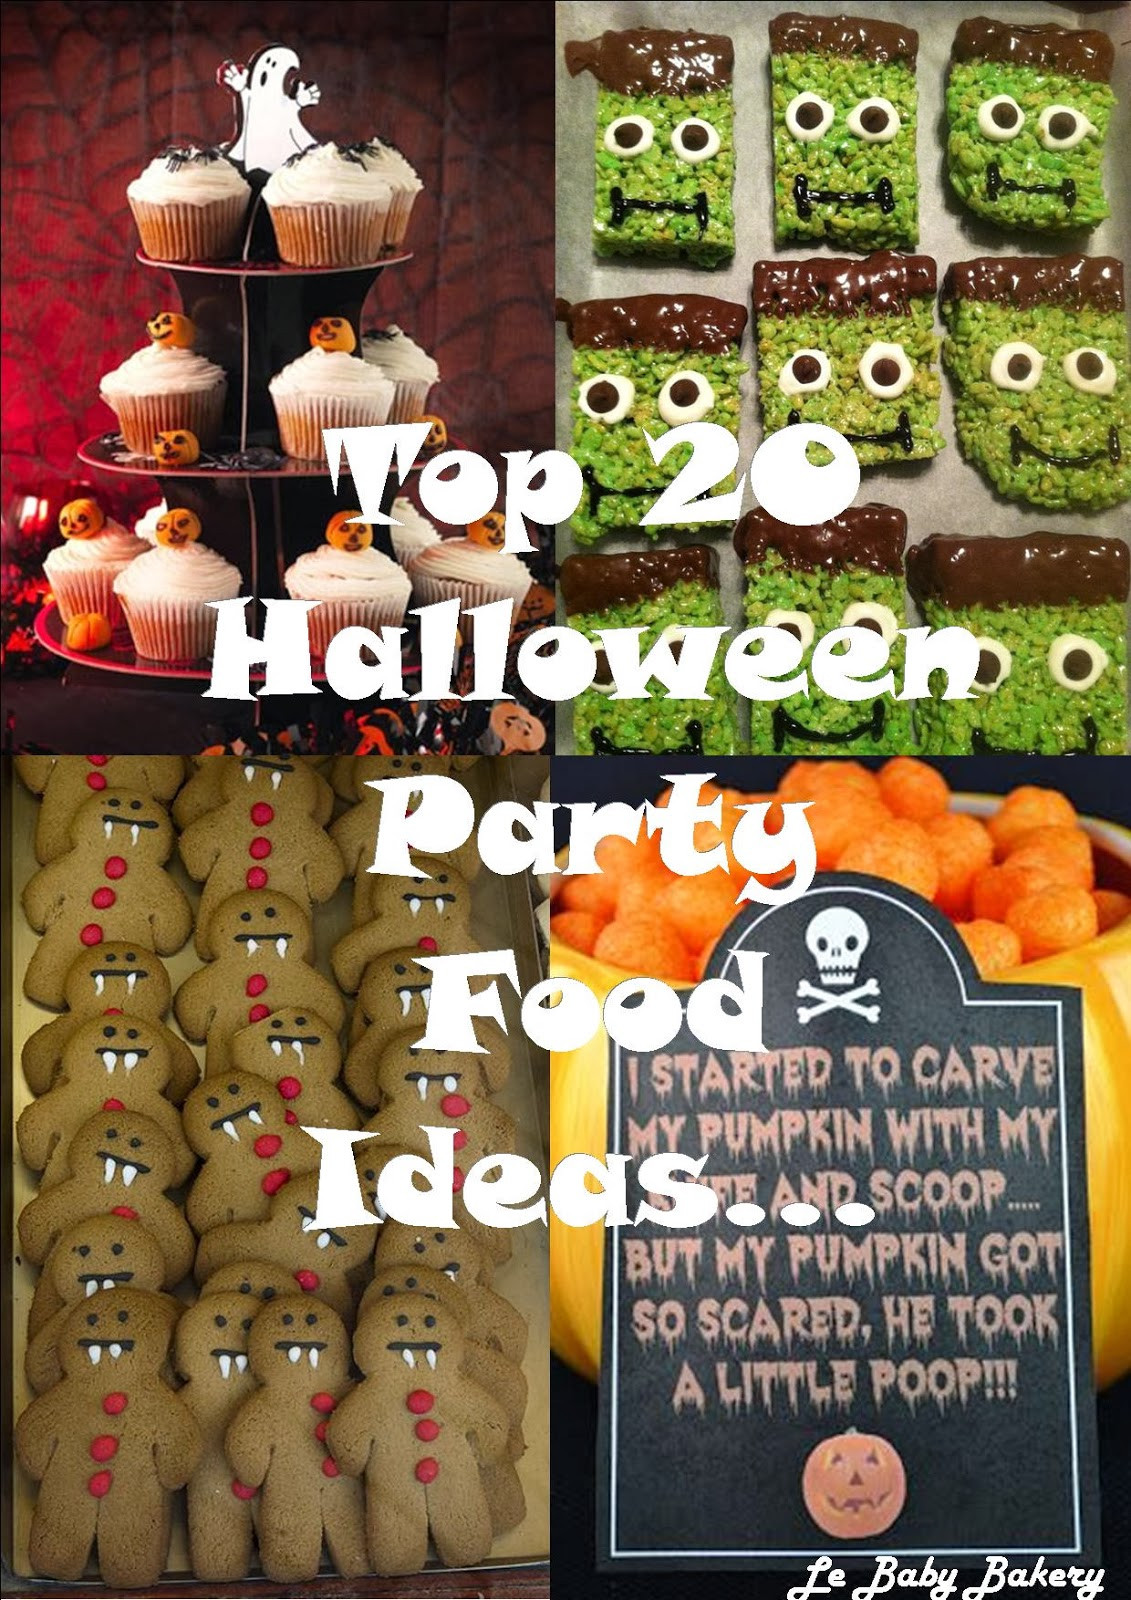 Halloween Party Menu Ideas
 Top 20 Halloween Party Food Ideas